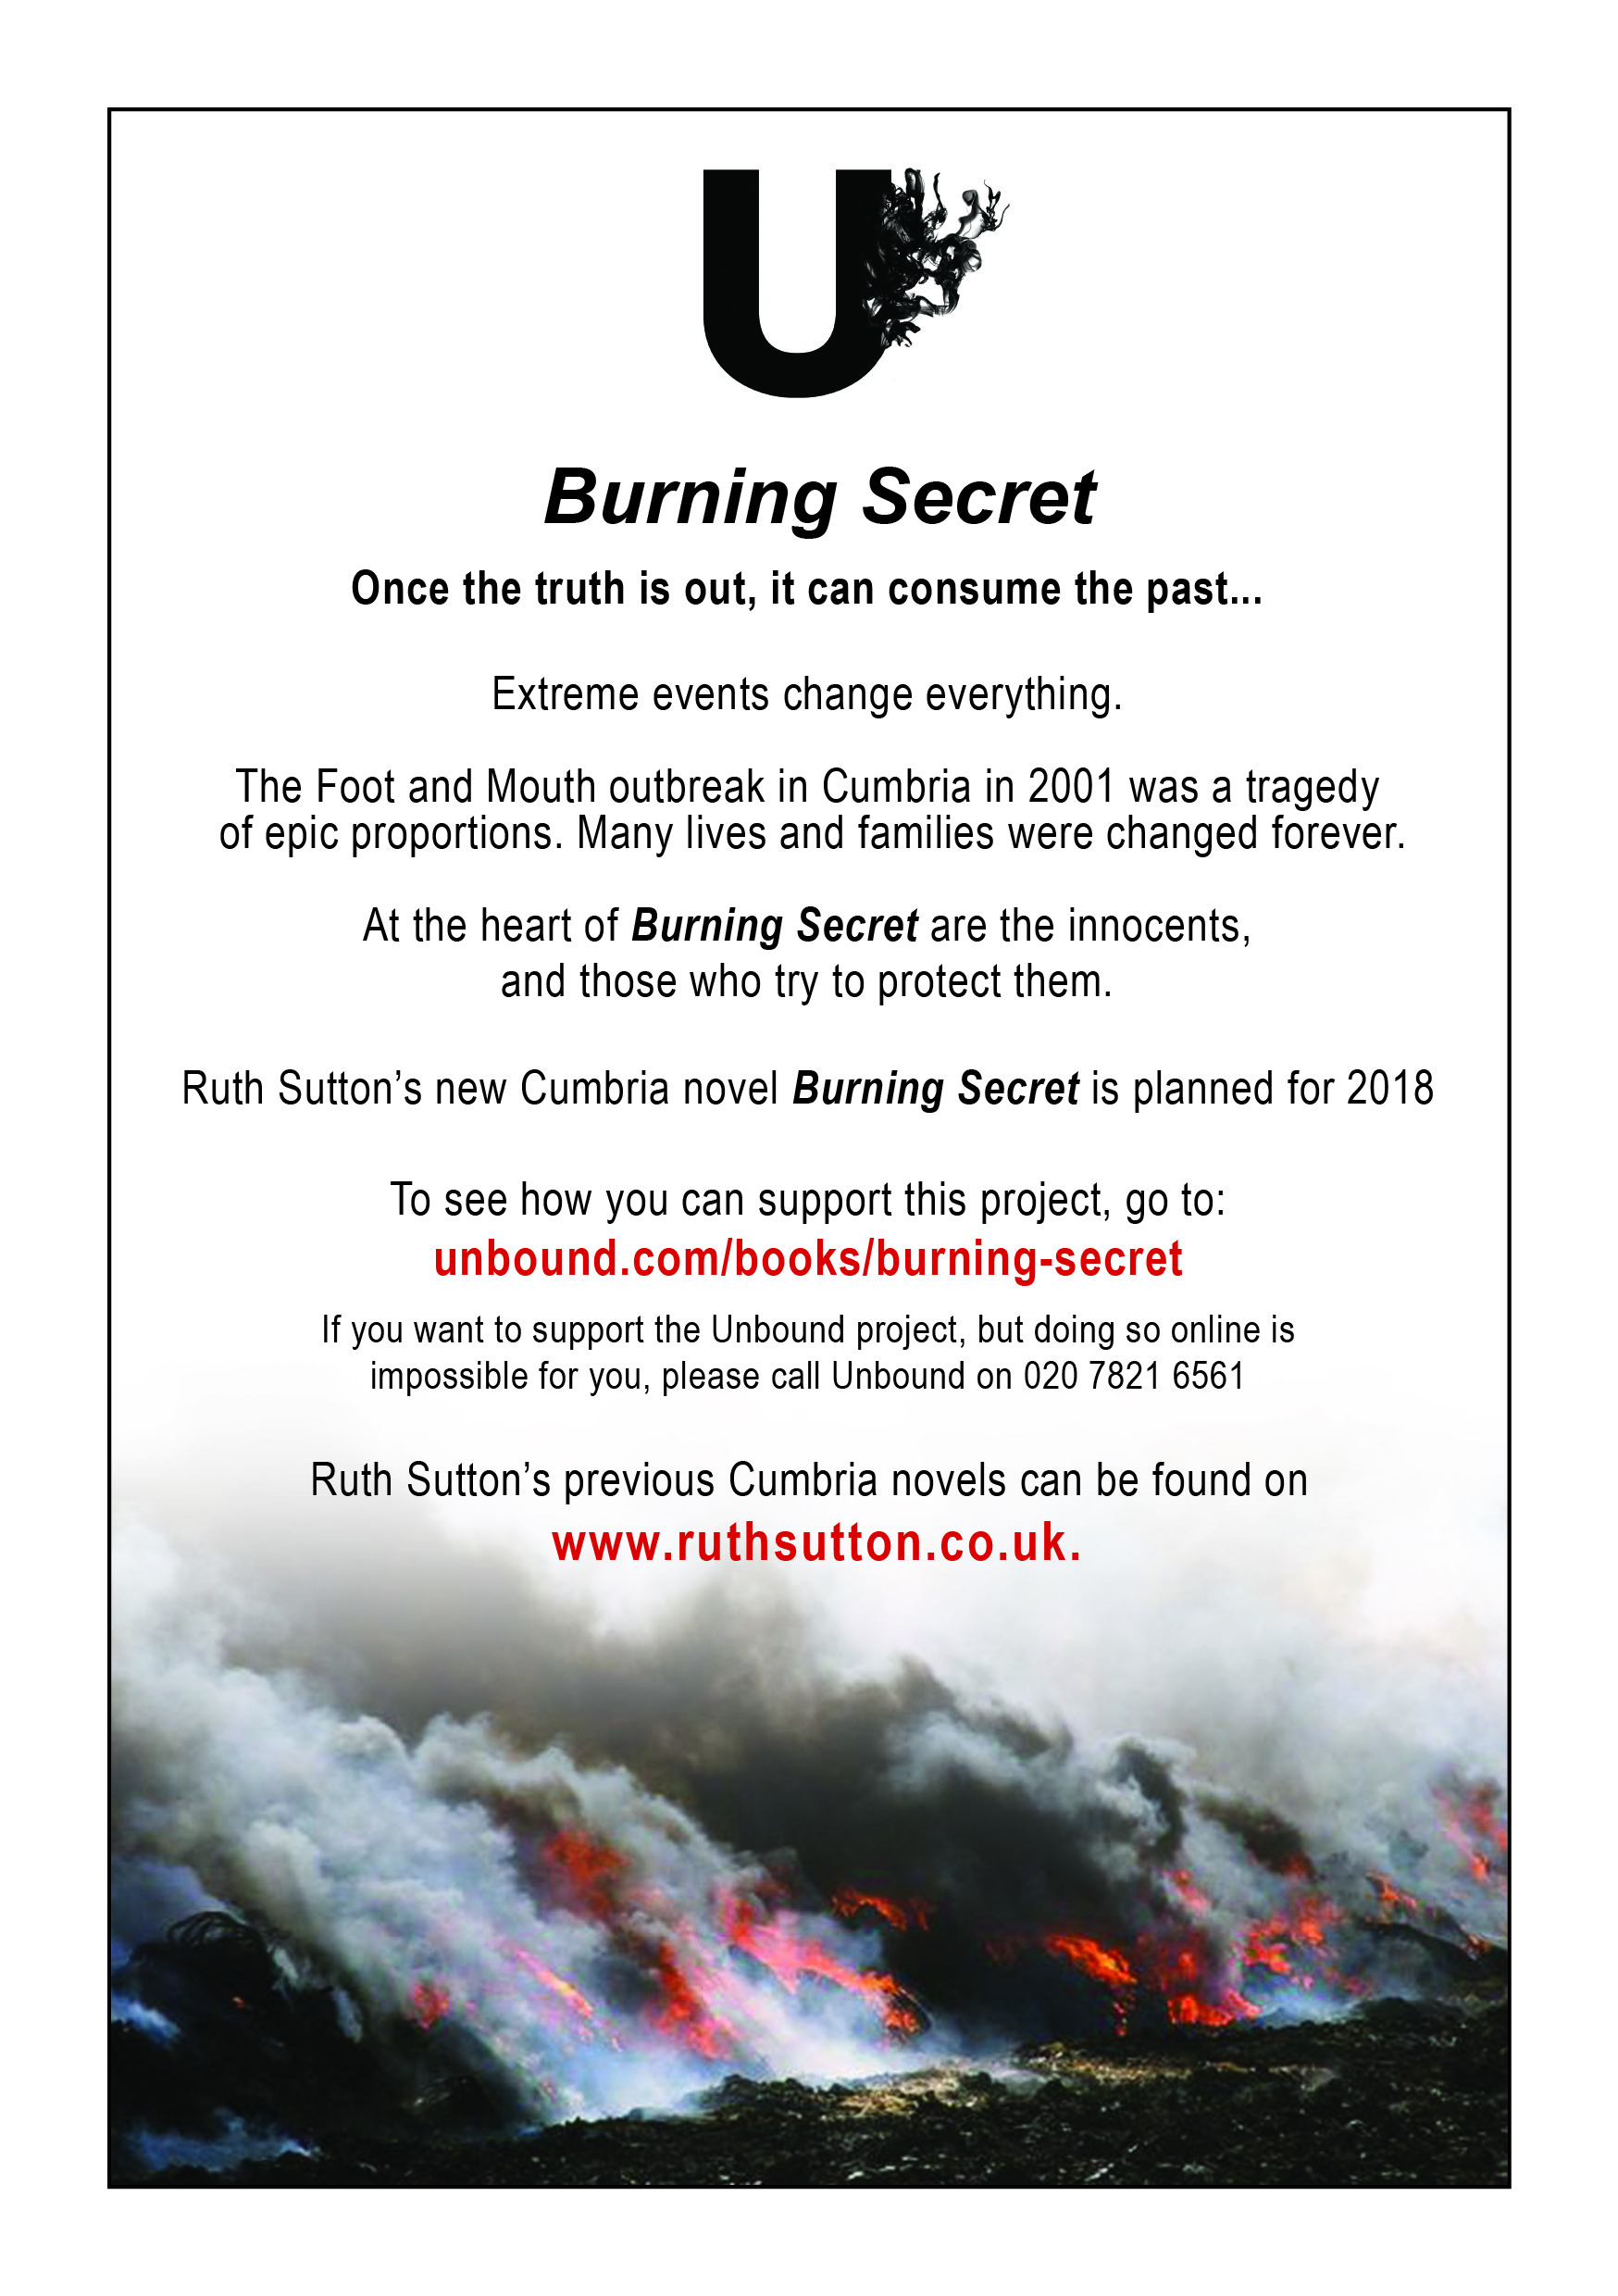 Burning Secret Flyer